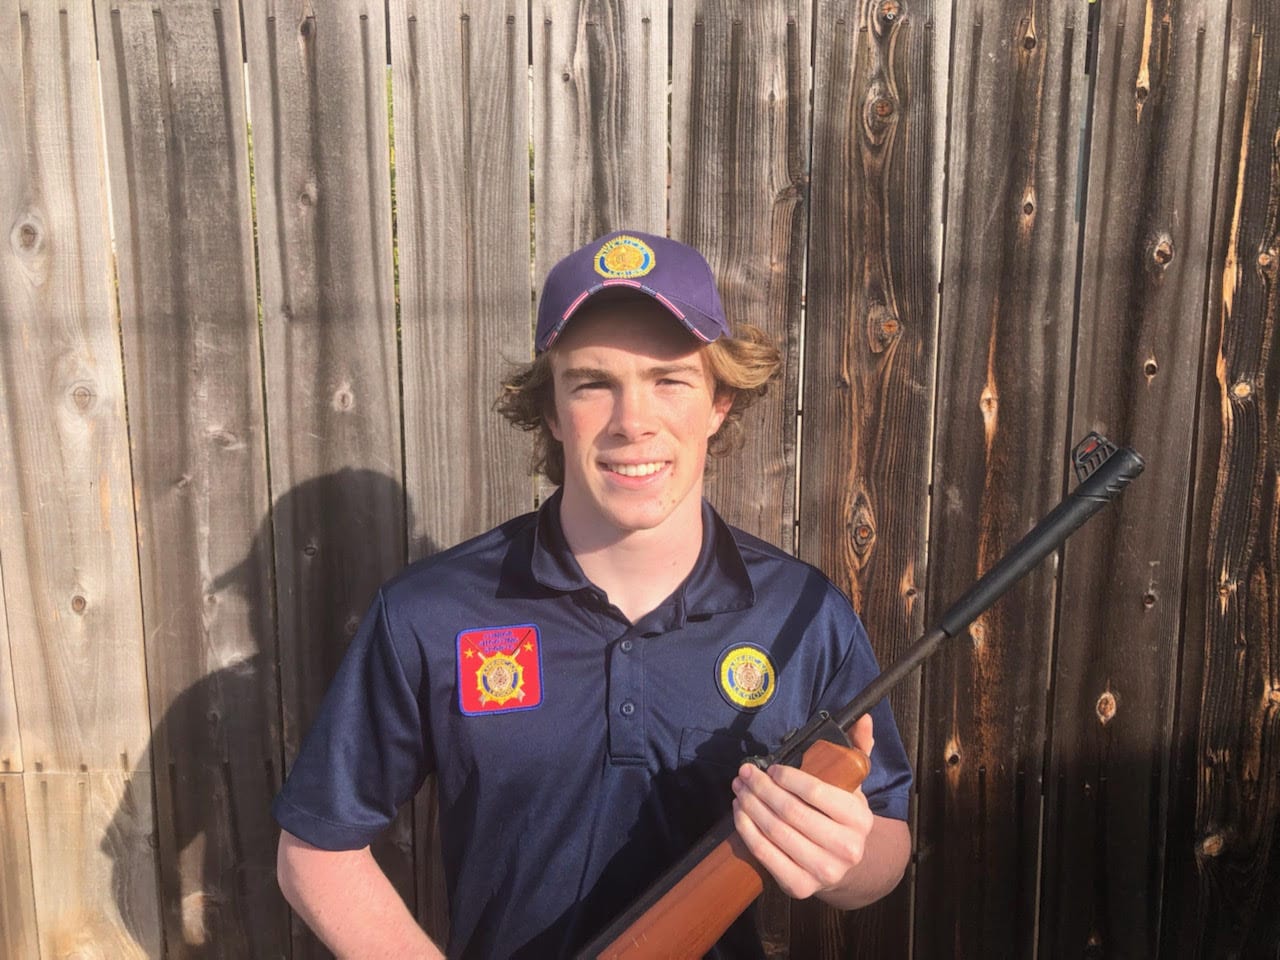 San Diego teen wins state shooting sports tournament